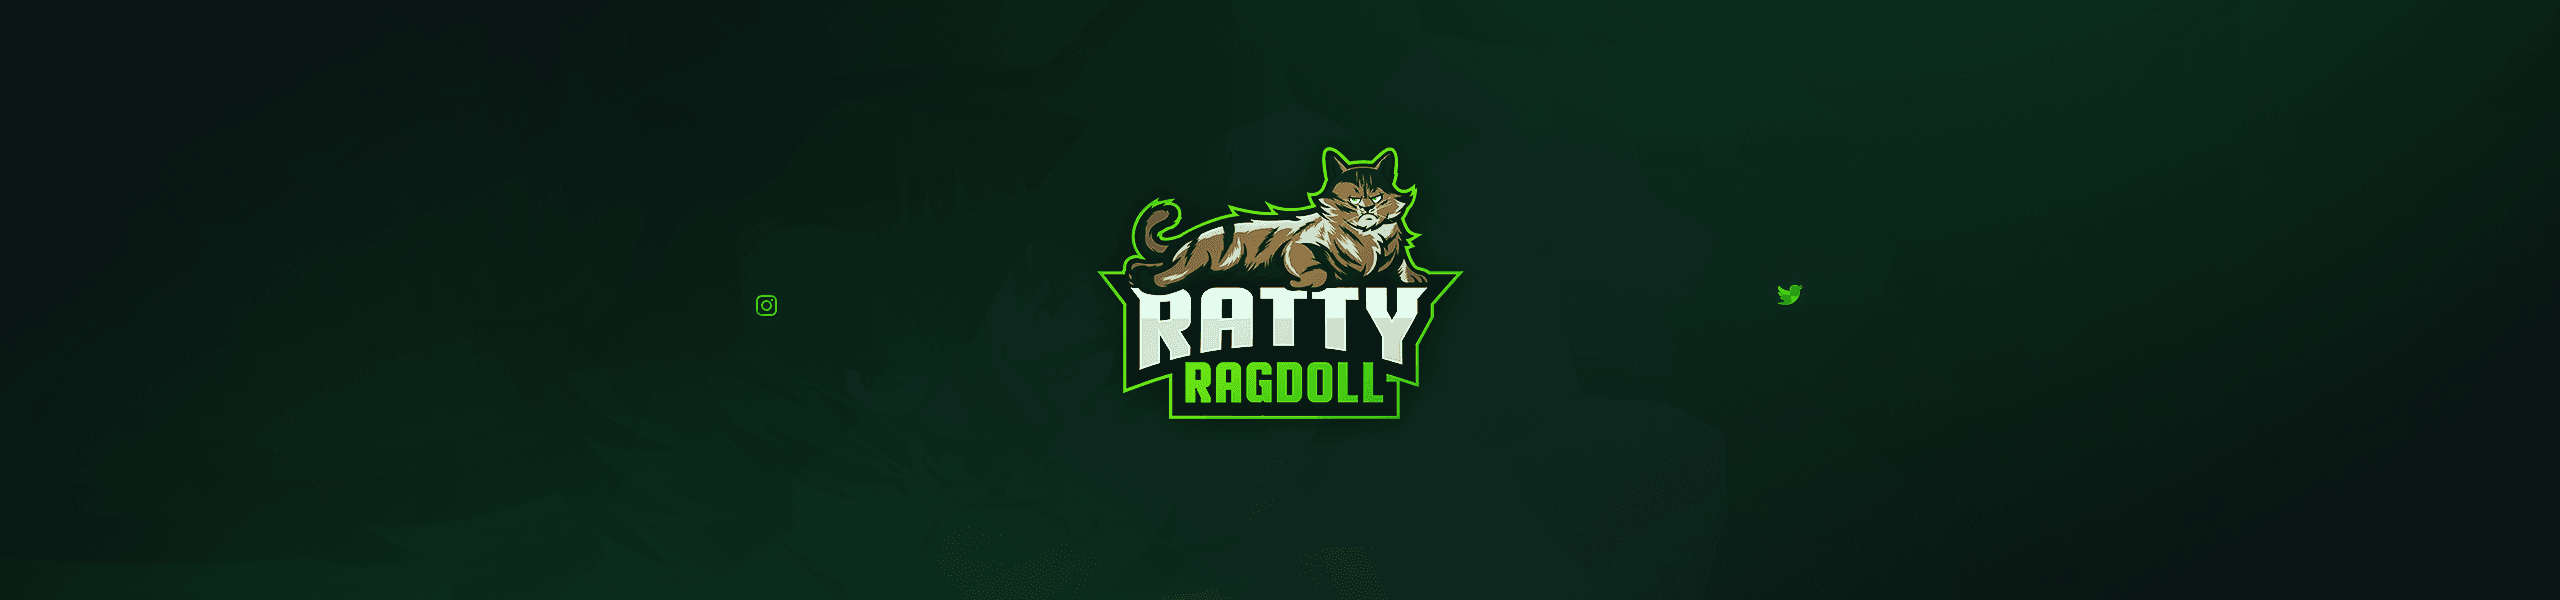 RattyRagdoll banner